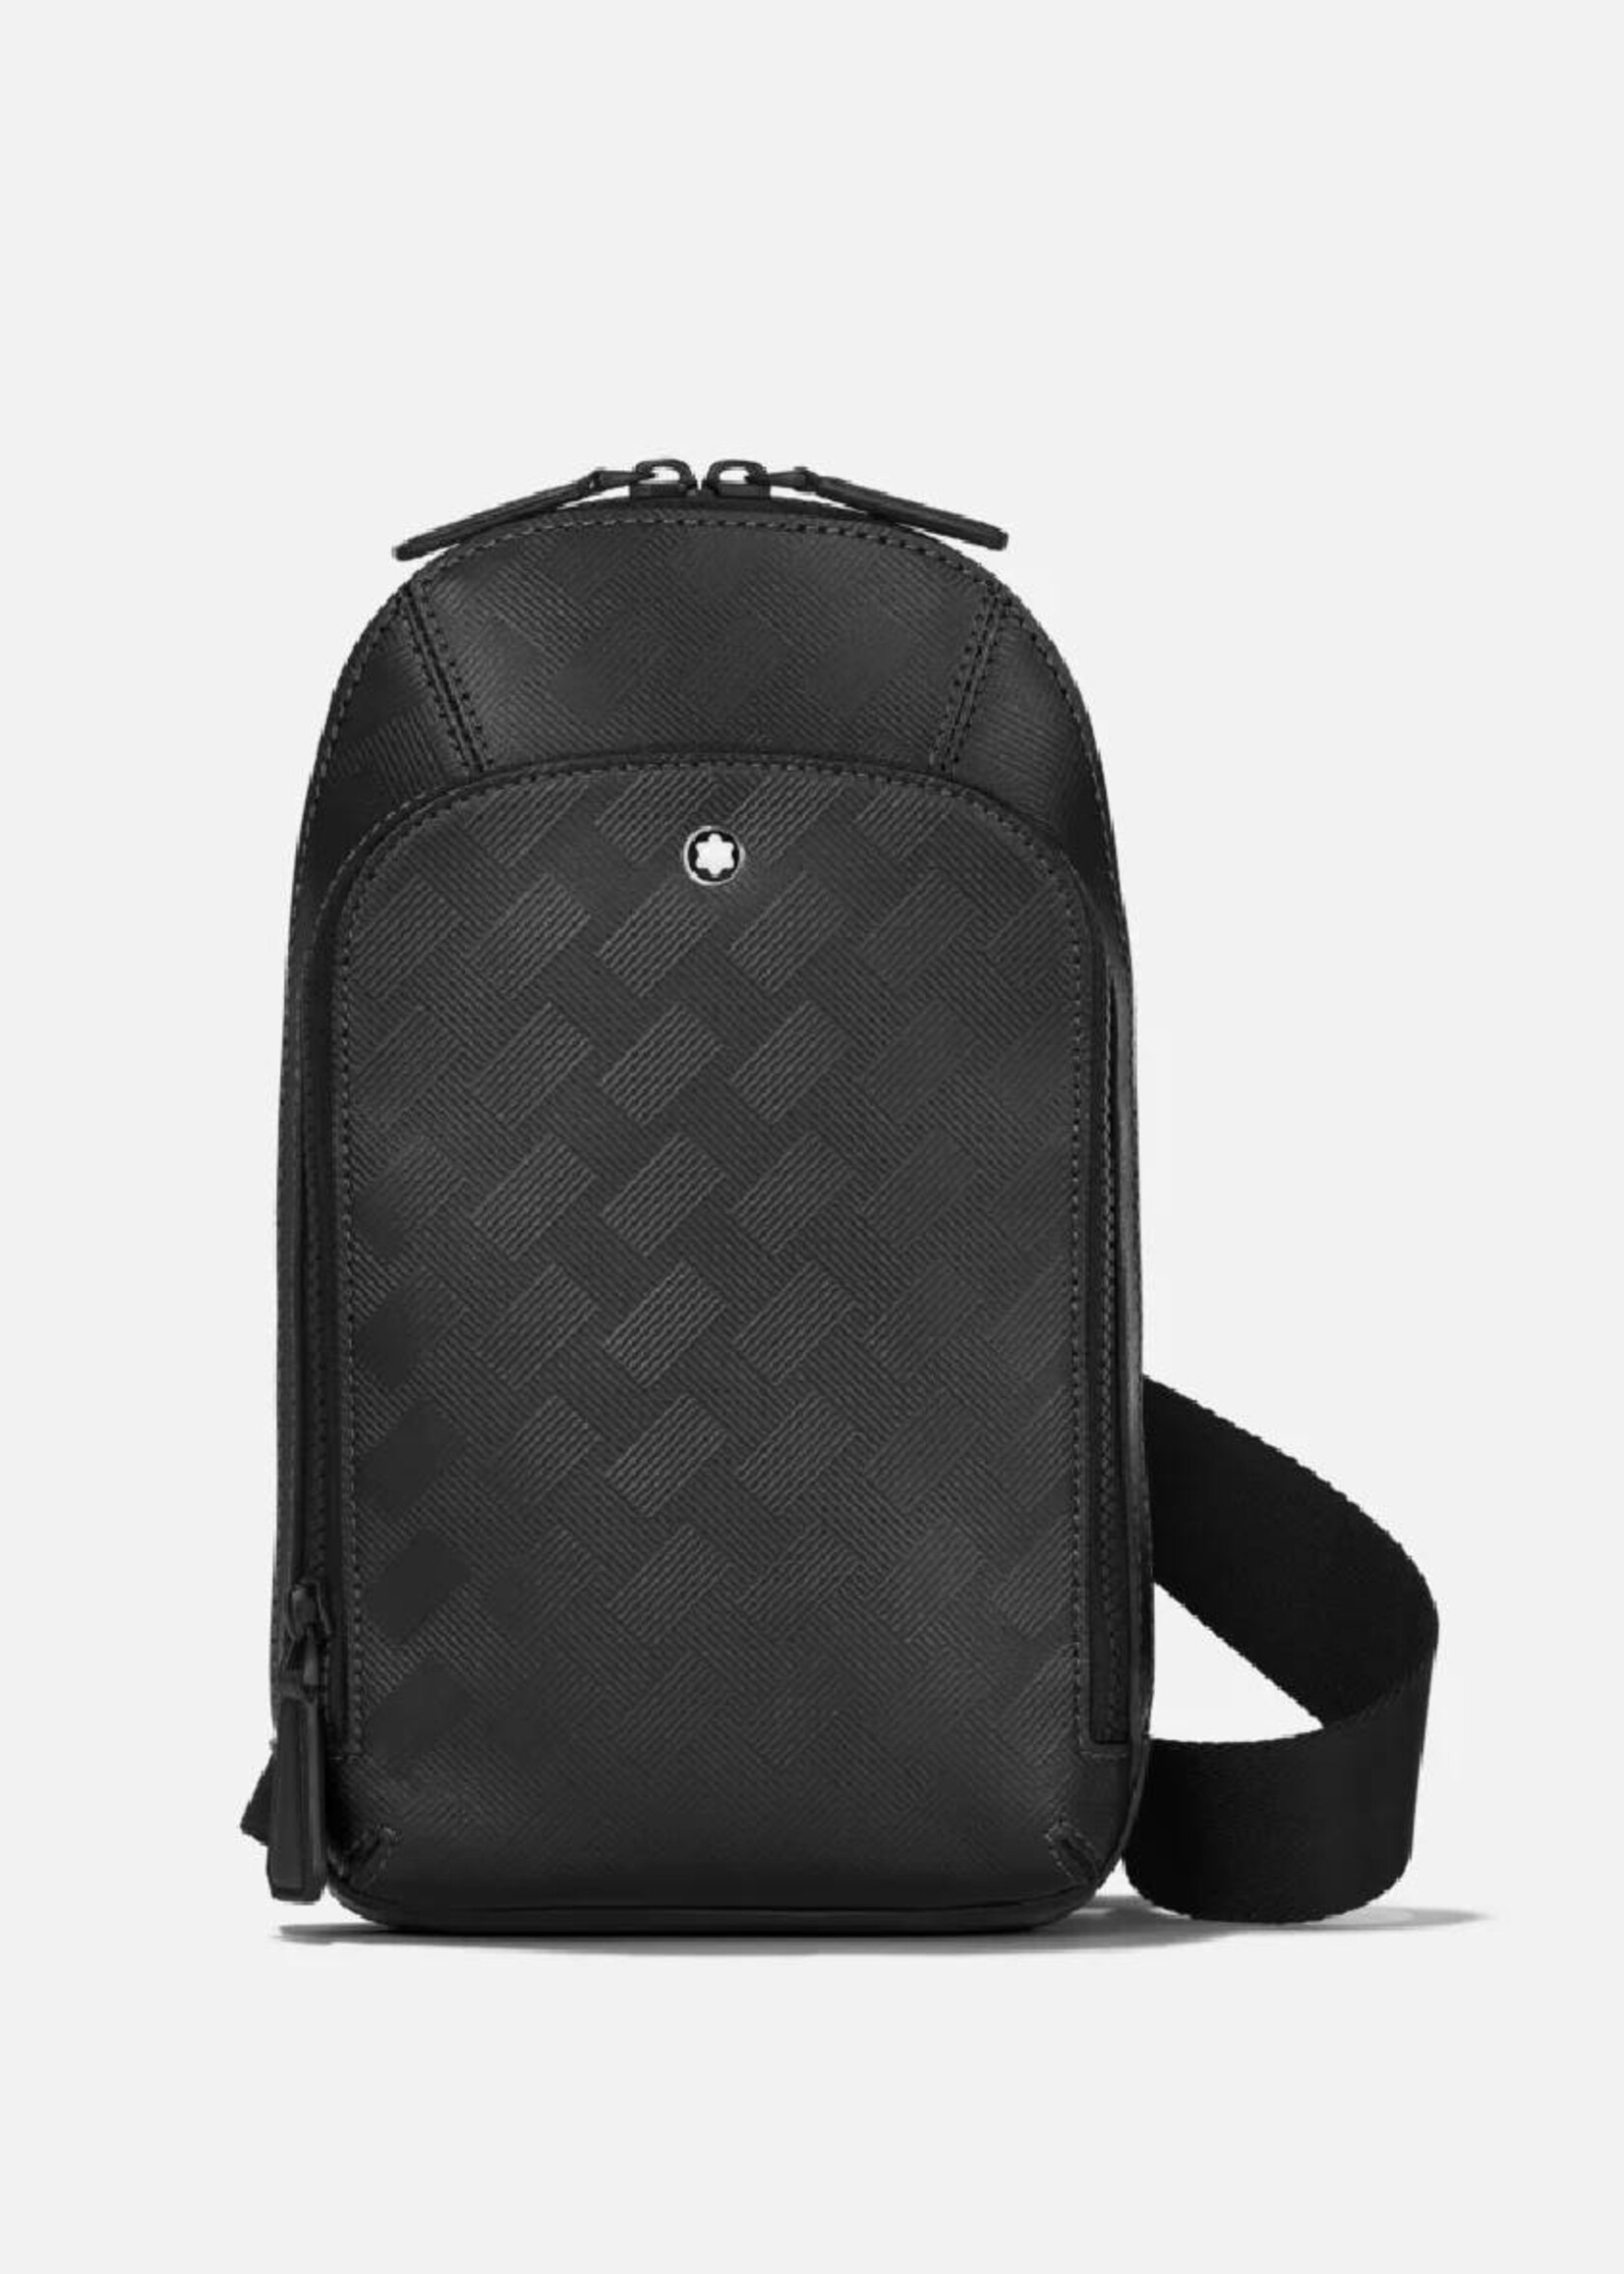 MONTBLANC Extreme 3.0 Sling Bag Black